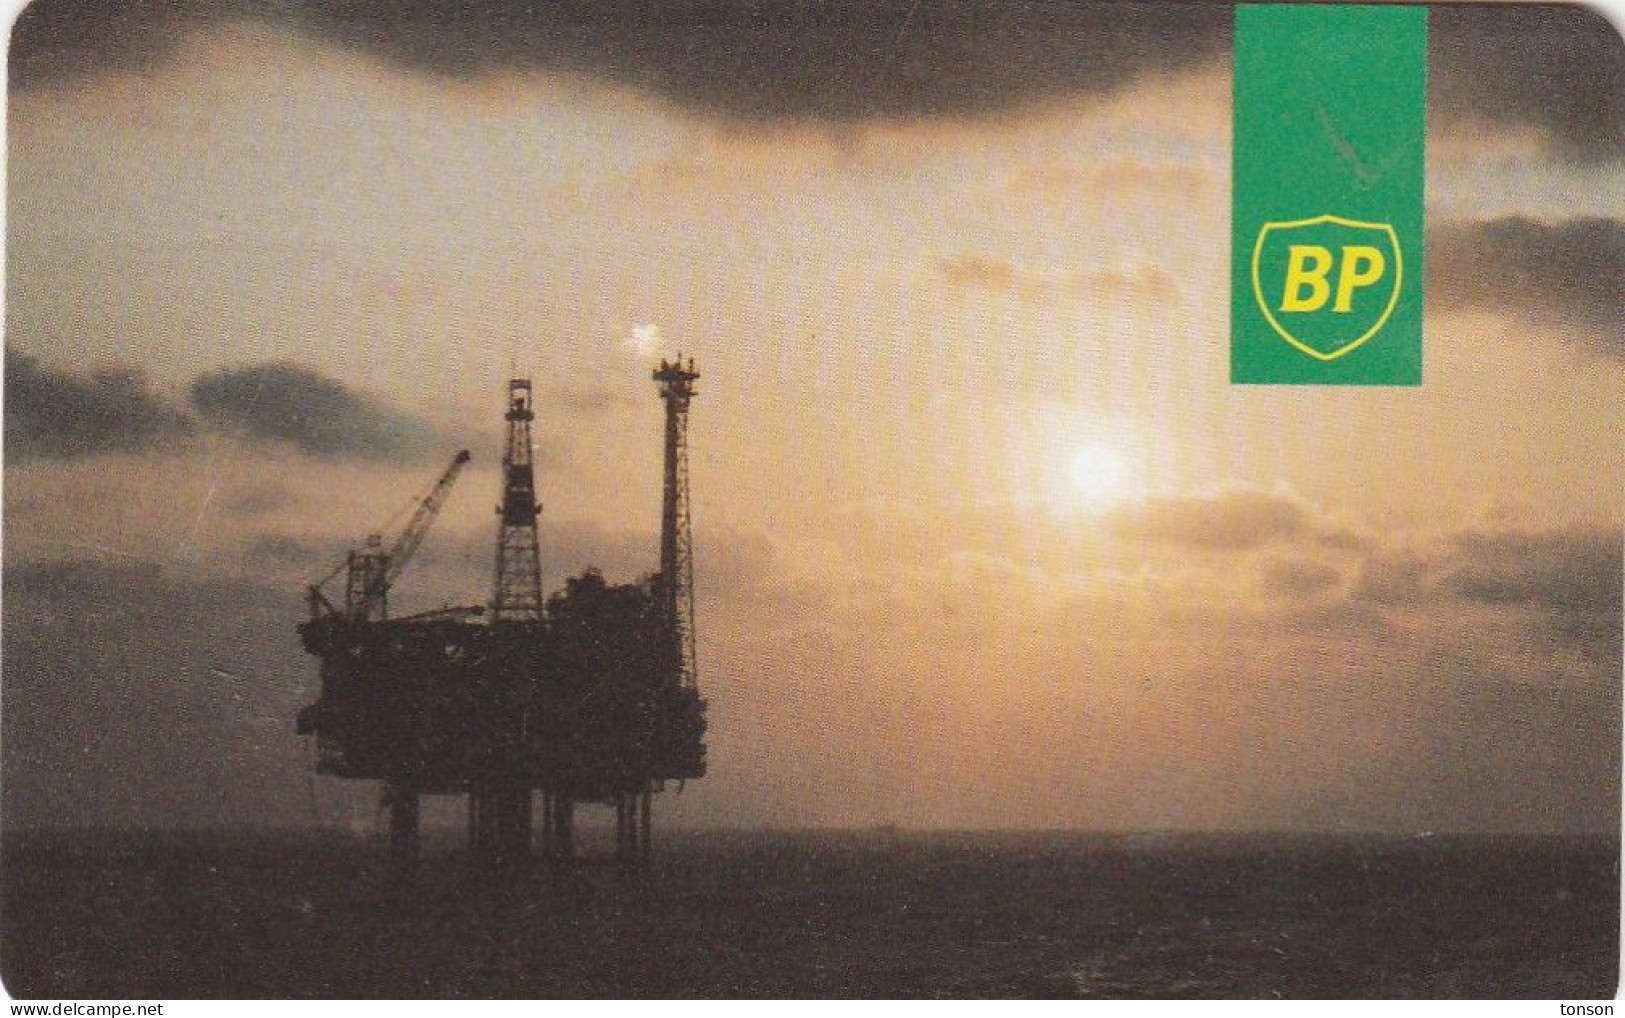 UK Oil Rig Phonecard - BP, GB-OIL-AUT-0006, IPL Scotland - 50u Red, 2 Scans. - [ 2] Oil Drilling Rig